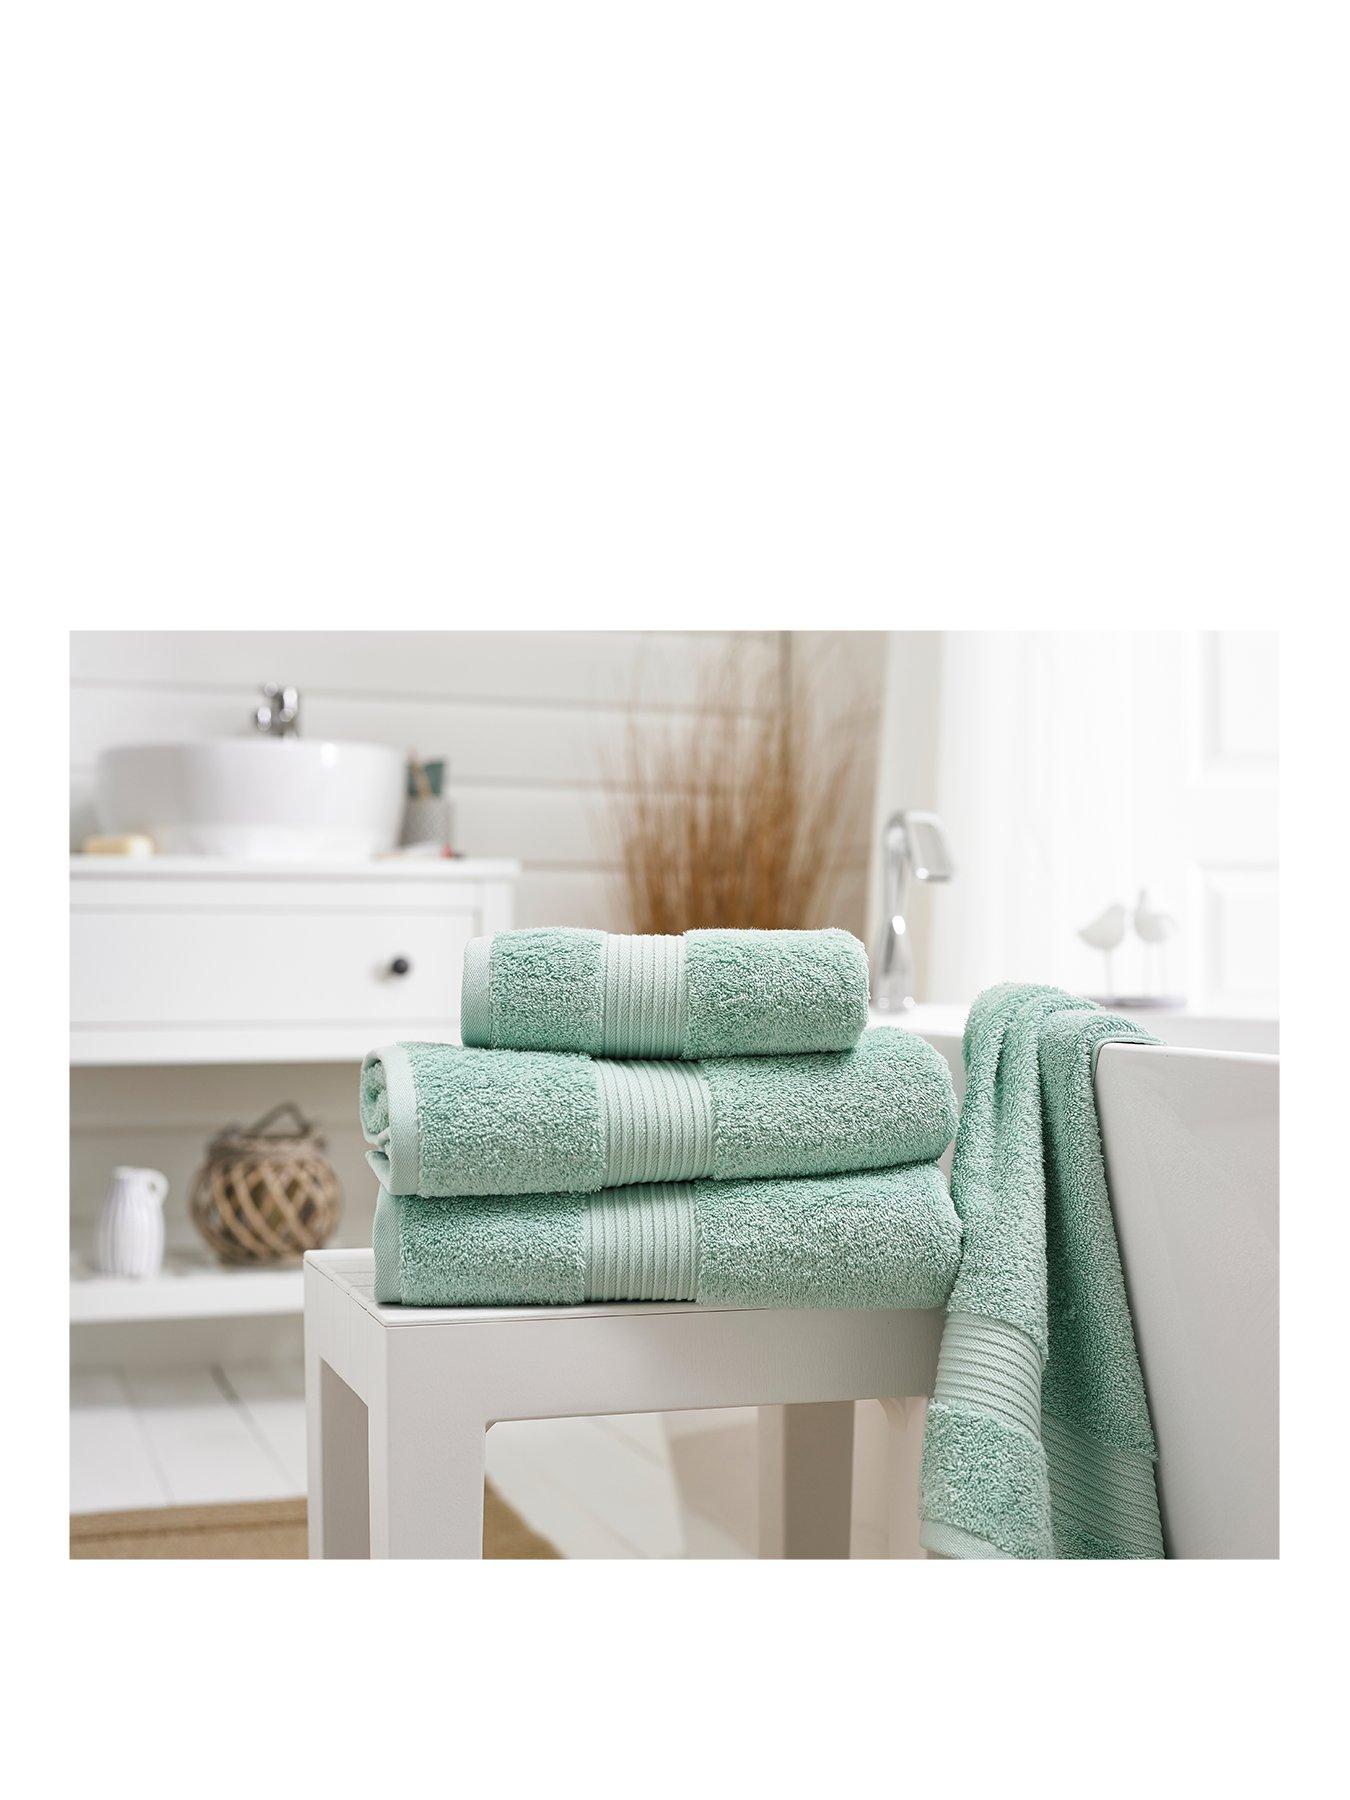 Prem Details about   Bliss Casa 6 Piece Towel Set Highly Absorbent Luxury Towels Bathroom Sets 